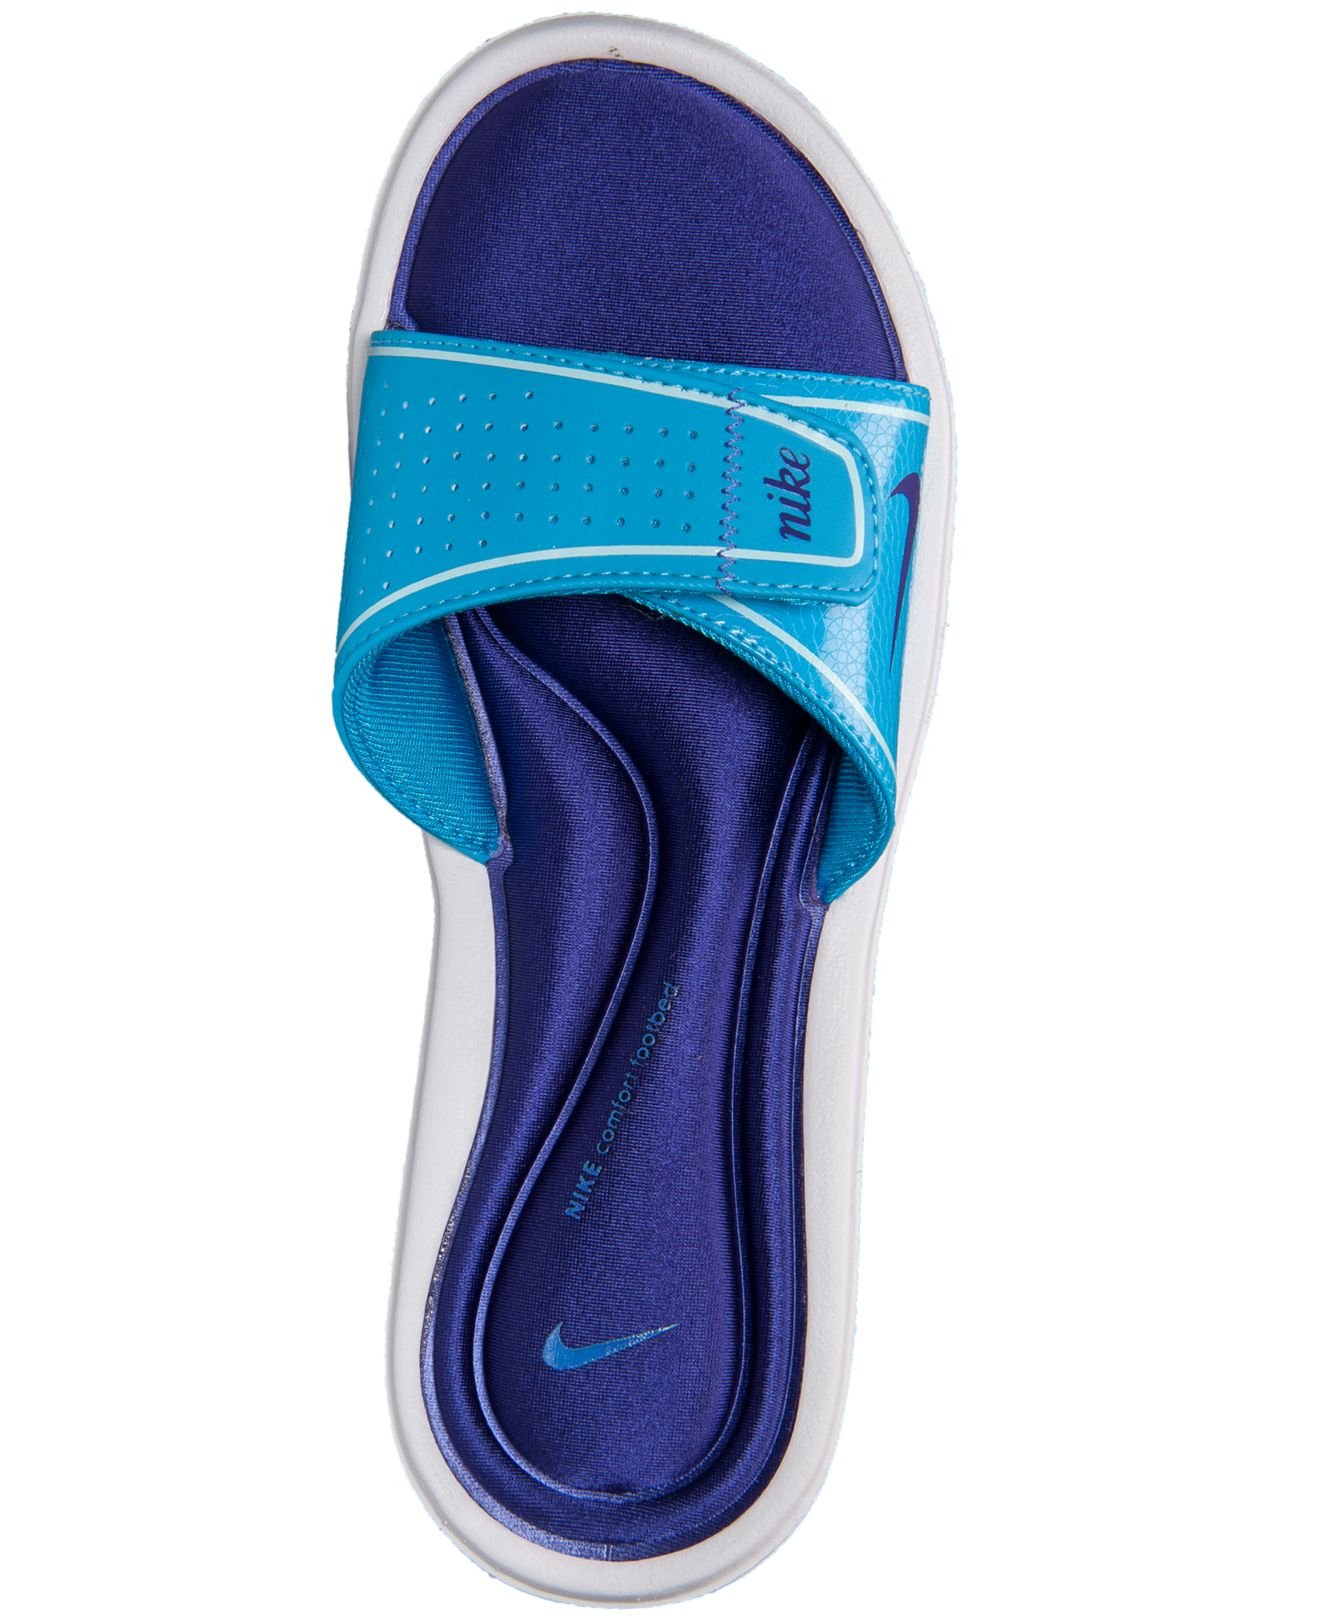 Lyst - Nike Women's Comfort Slide Sandals From Finish Line in Blue